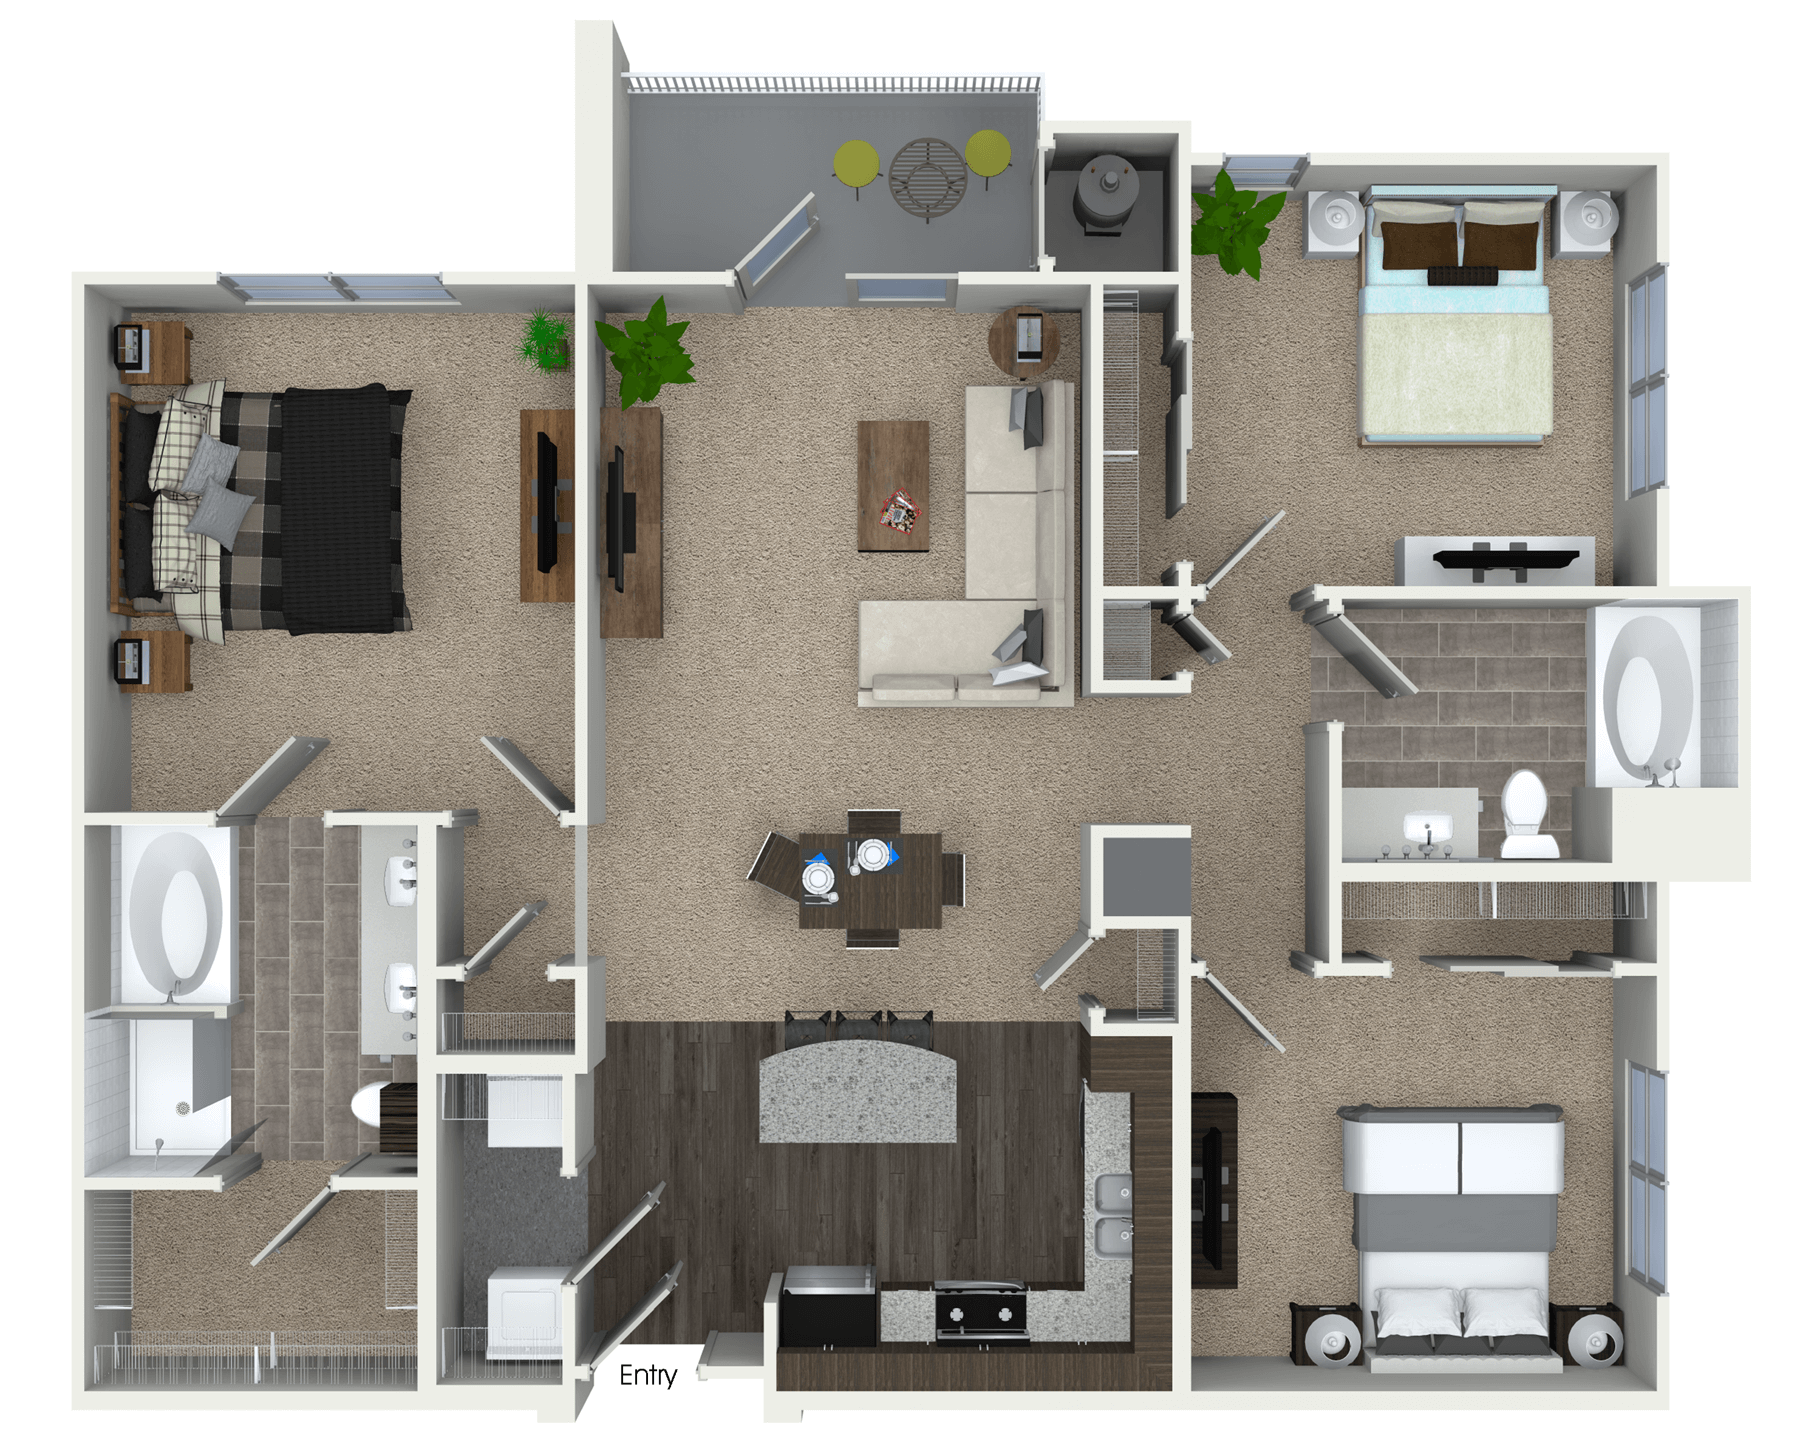 Floorplan for Apartment #3402, 3 bedroom unit at Halstead Marlborough